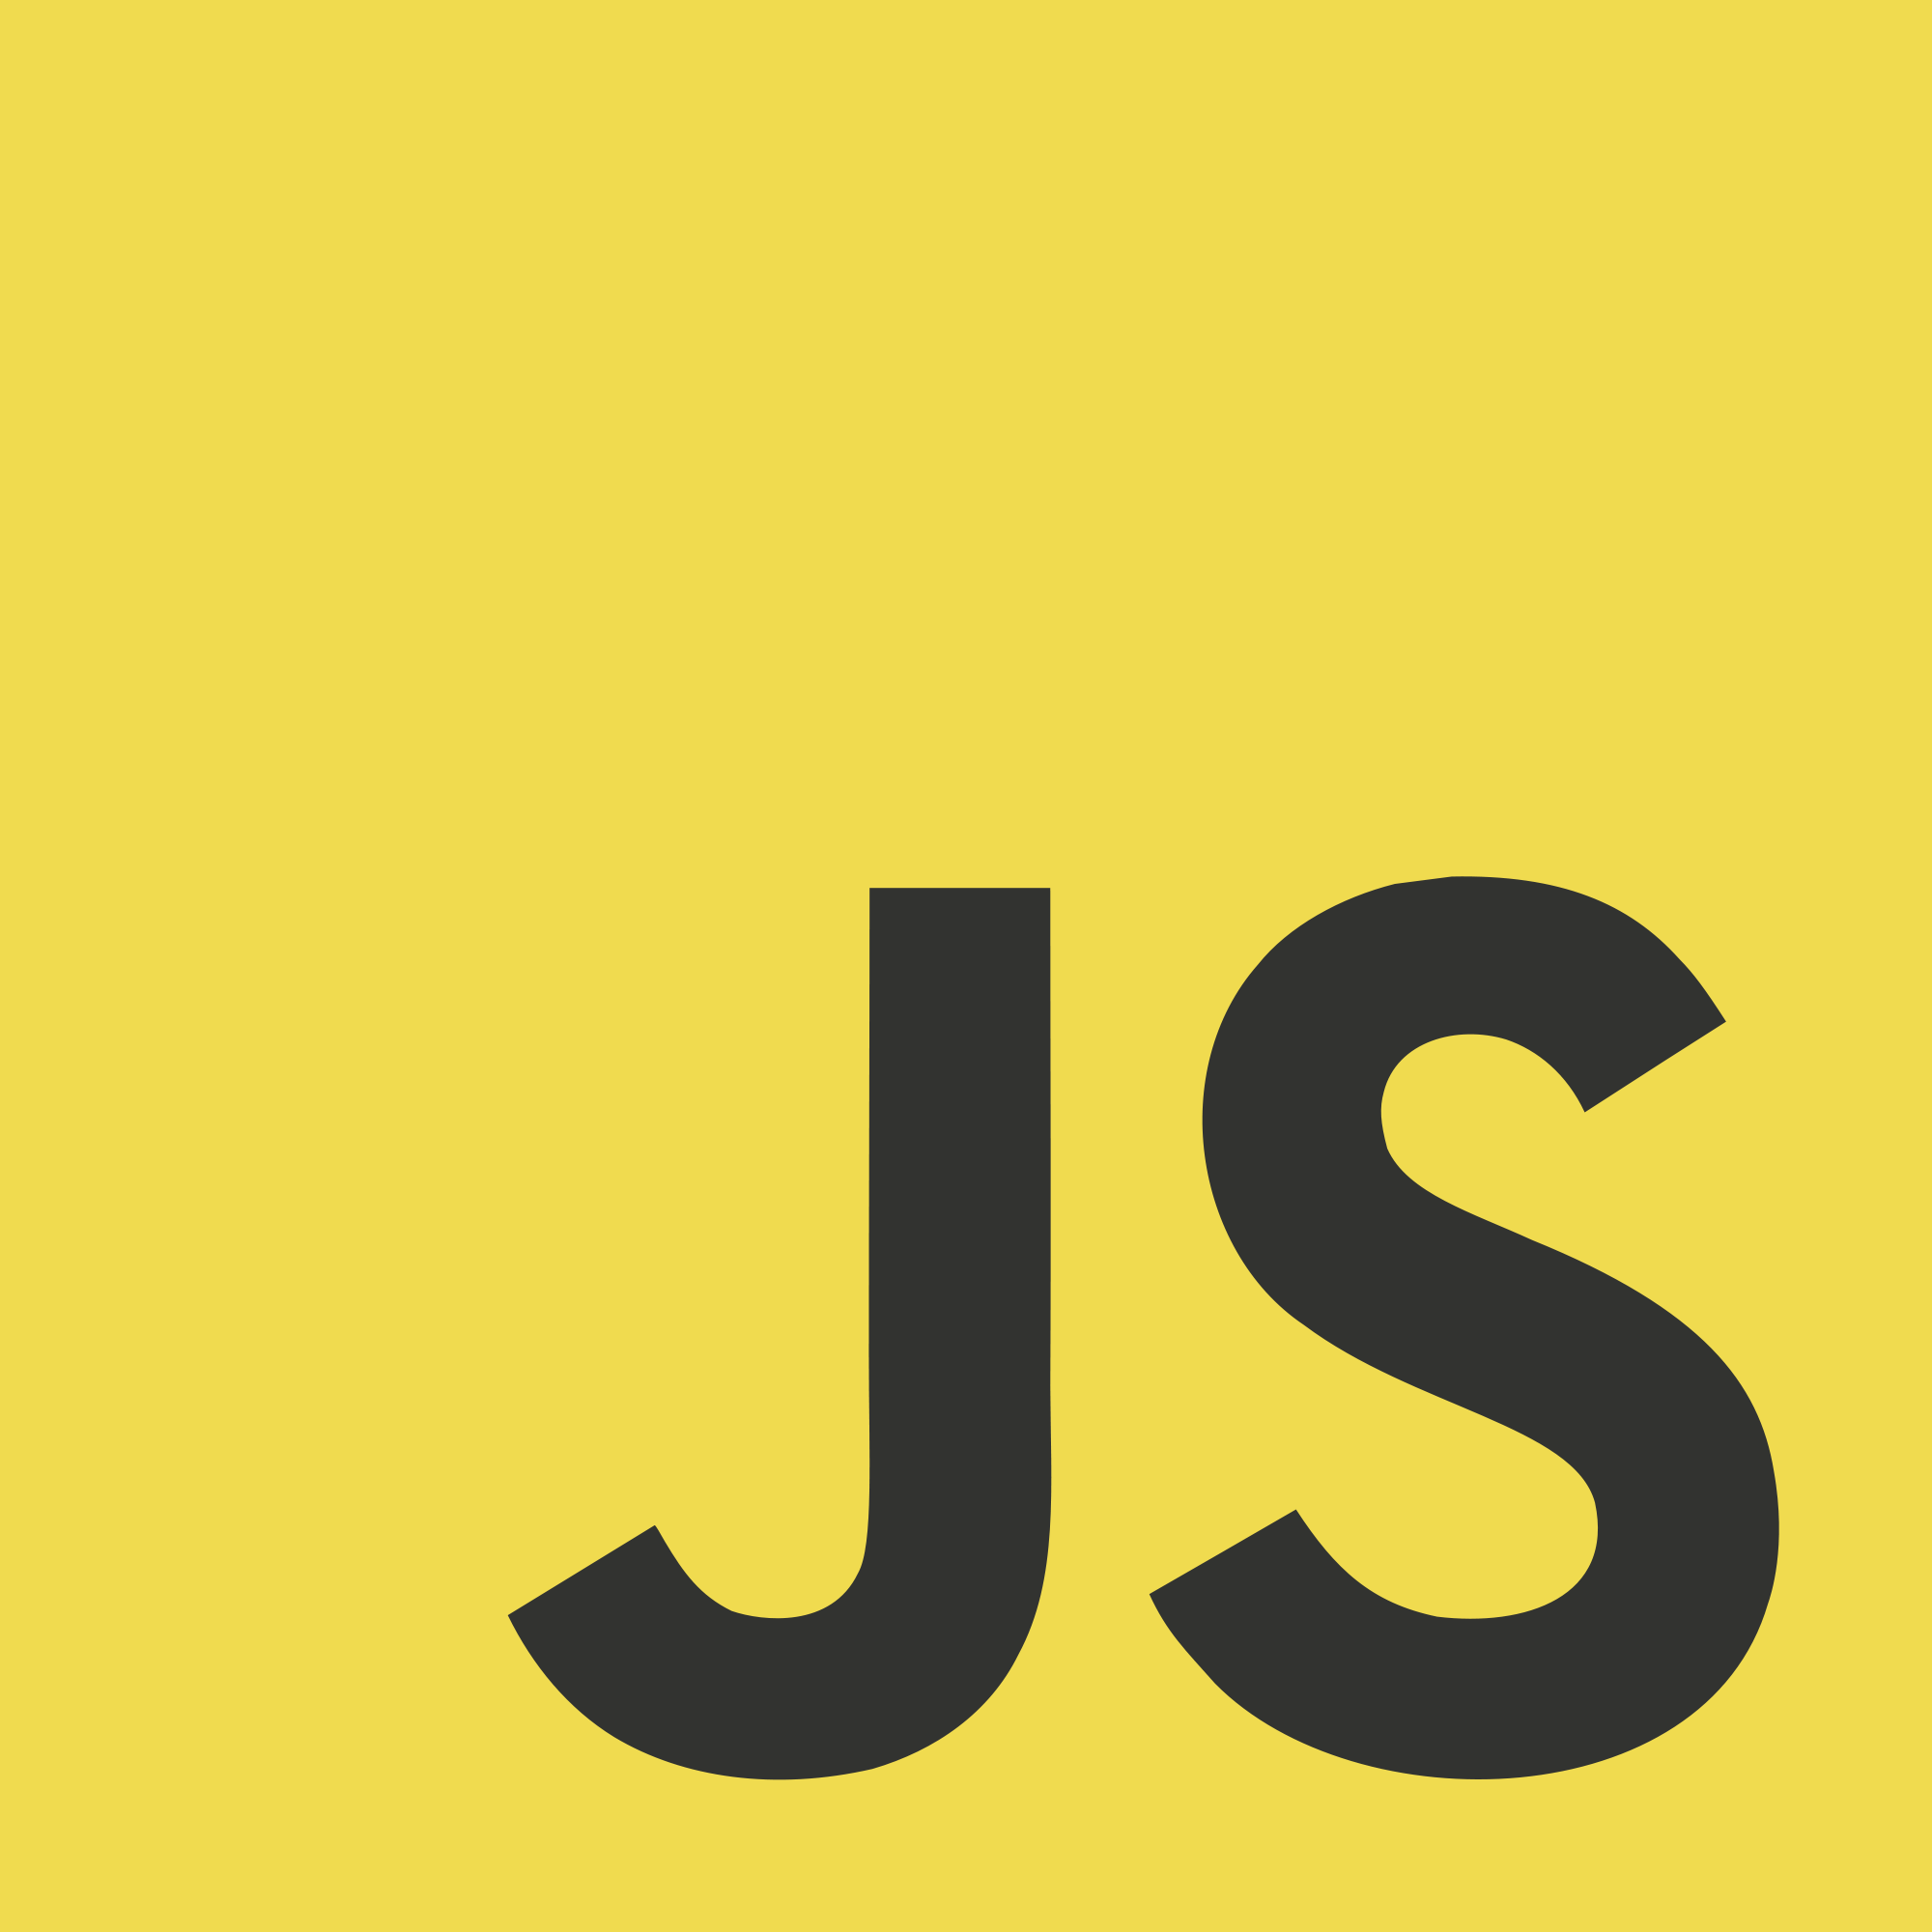 JavaScript: due implementazioni alternative per il Singleton Pattern